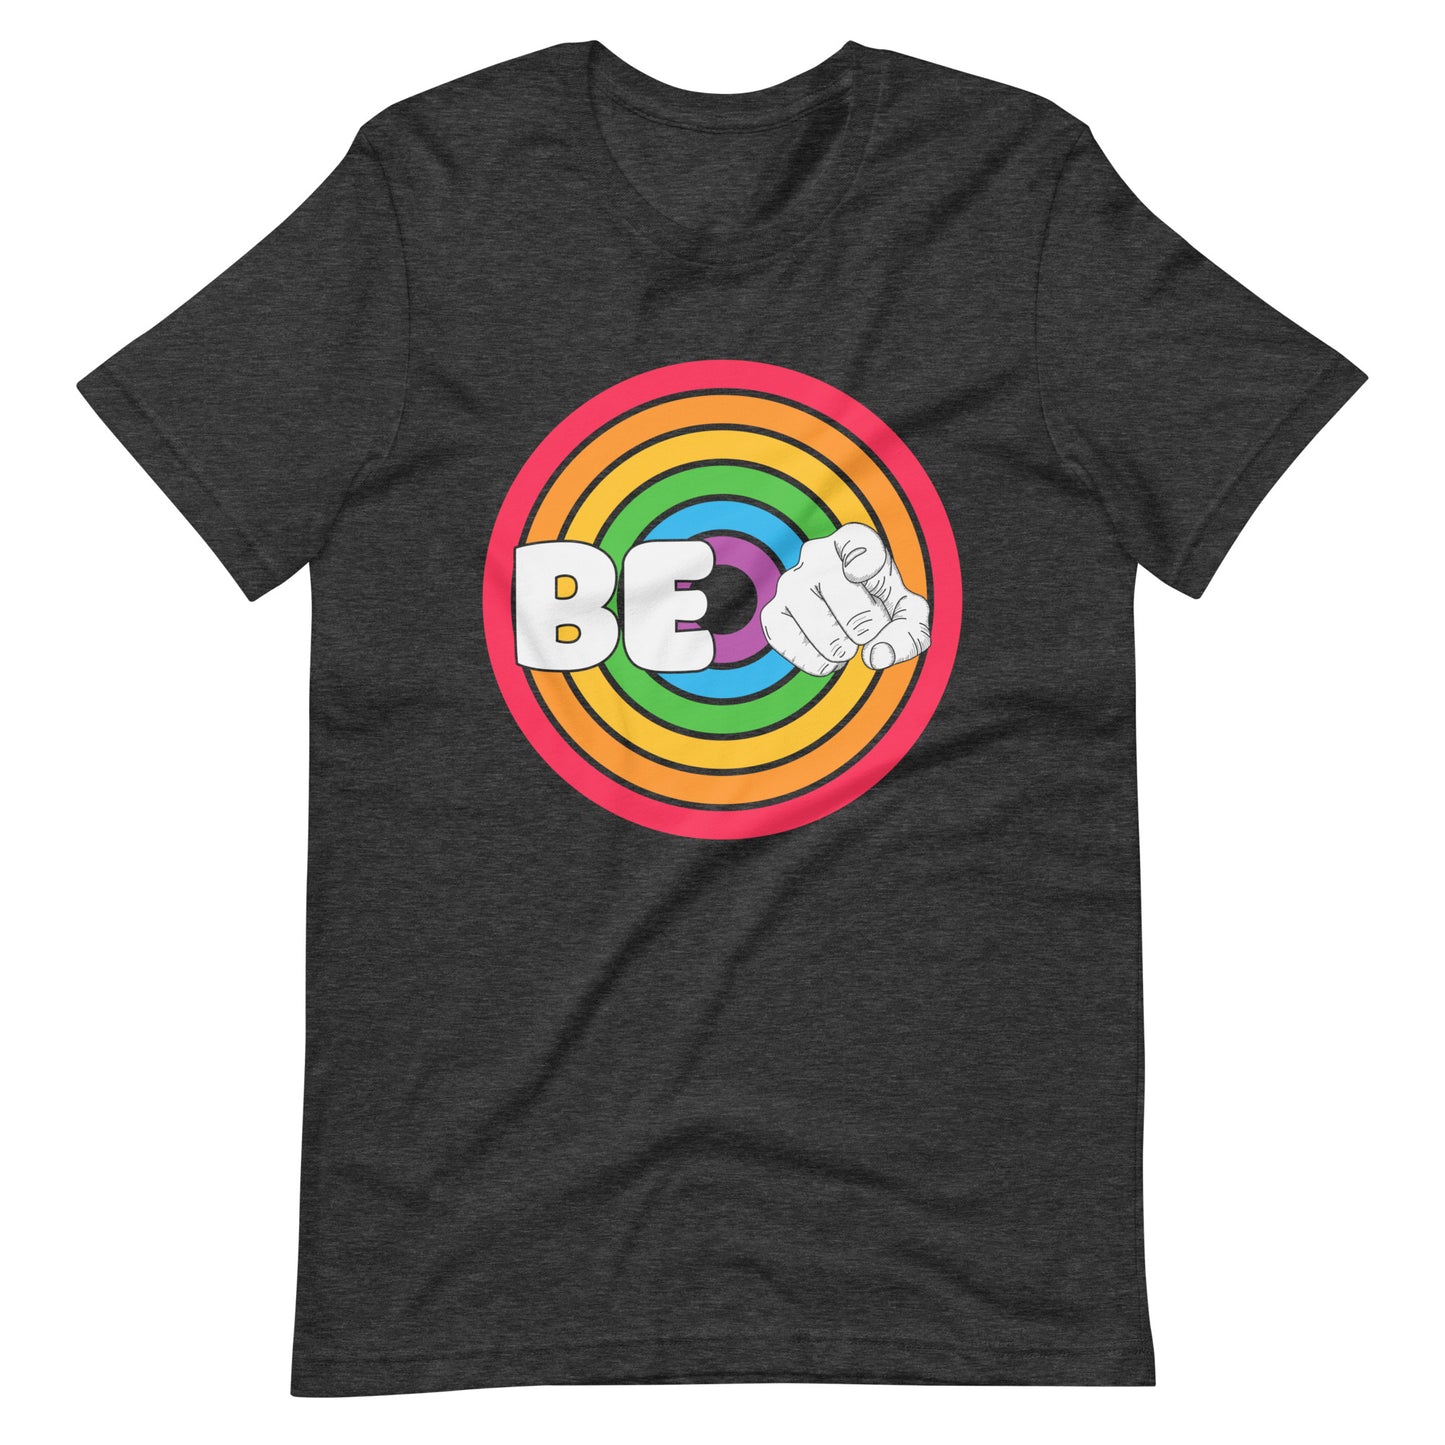 Be You Pride T-Shirt - gay pride apparel